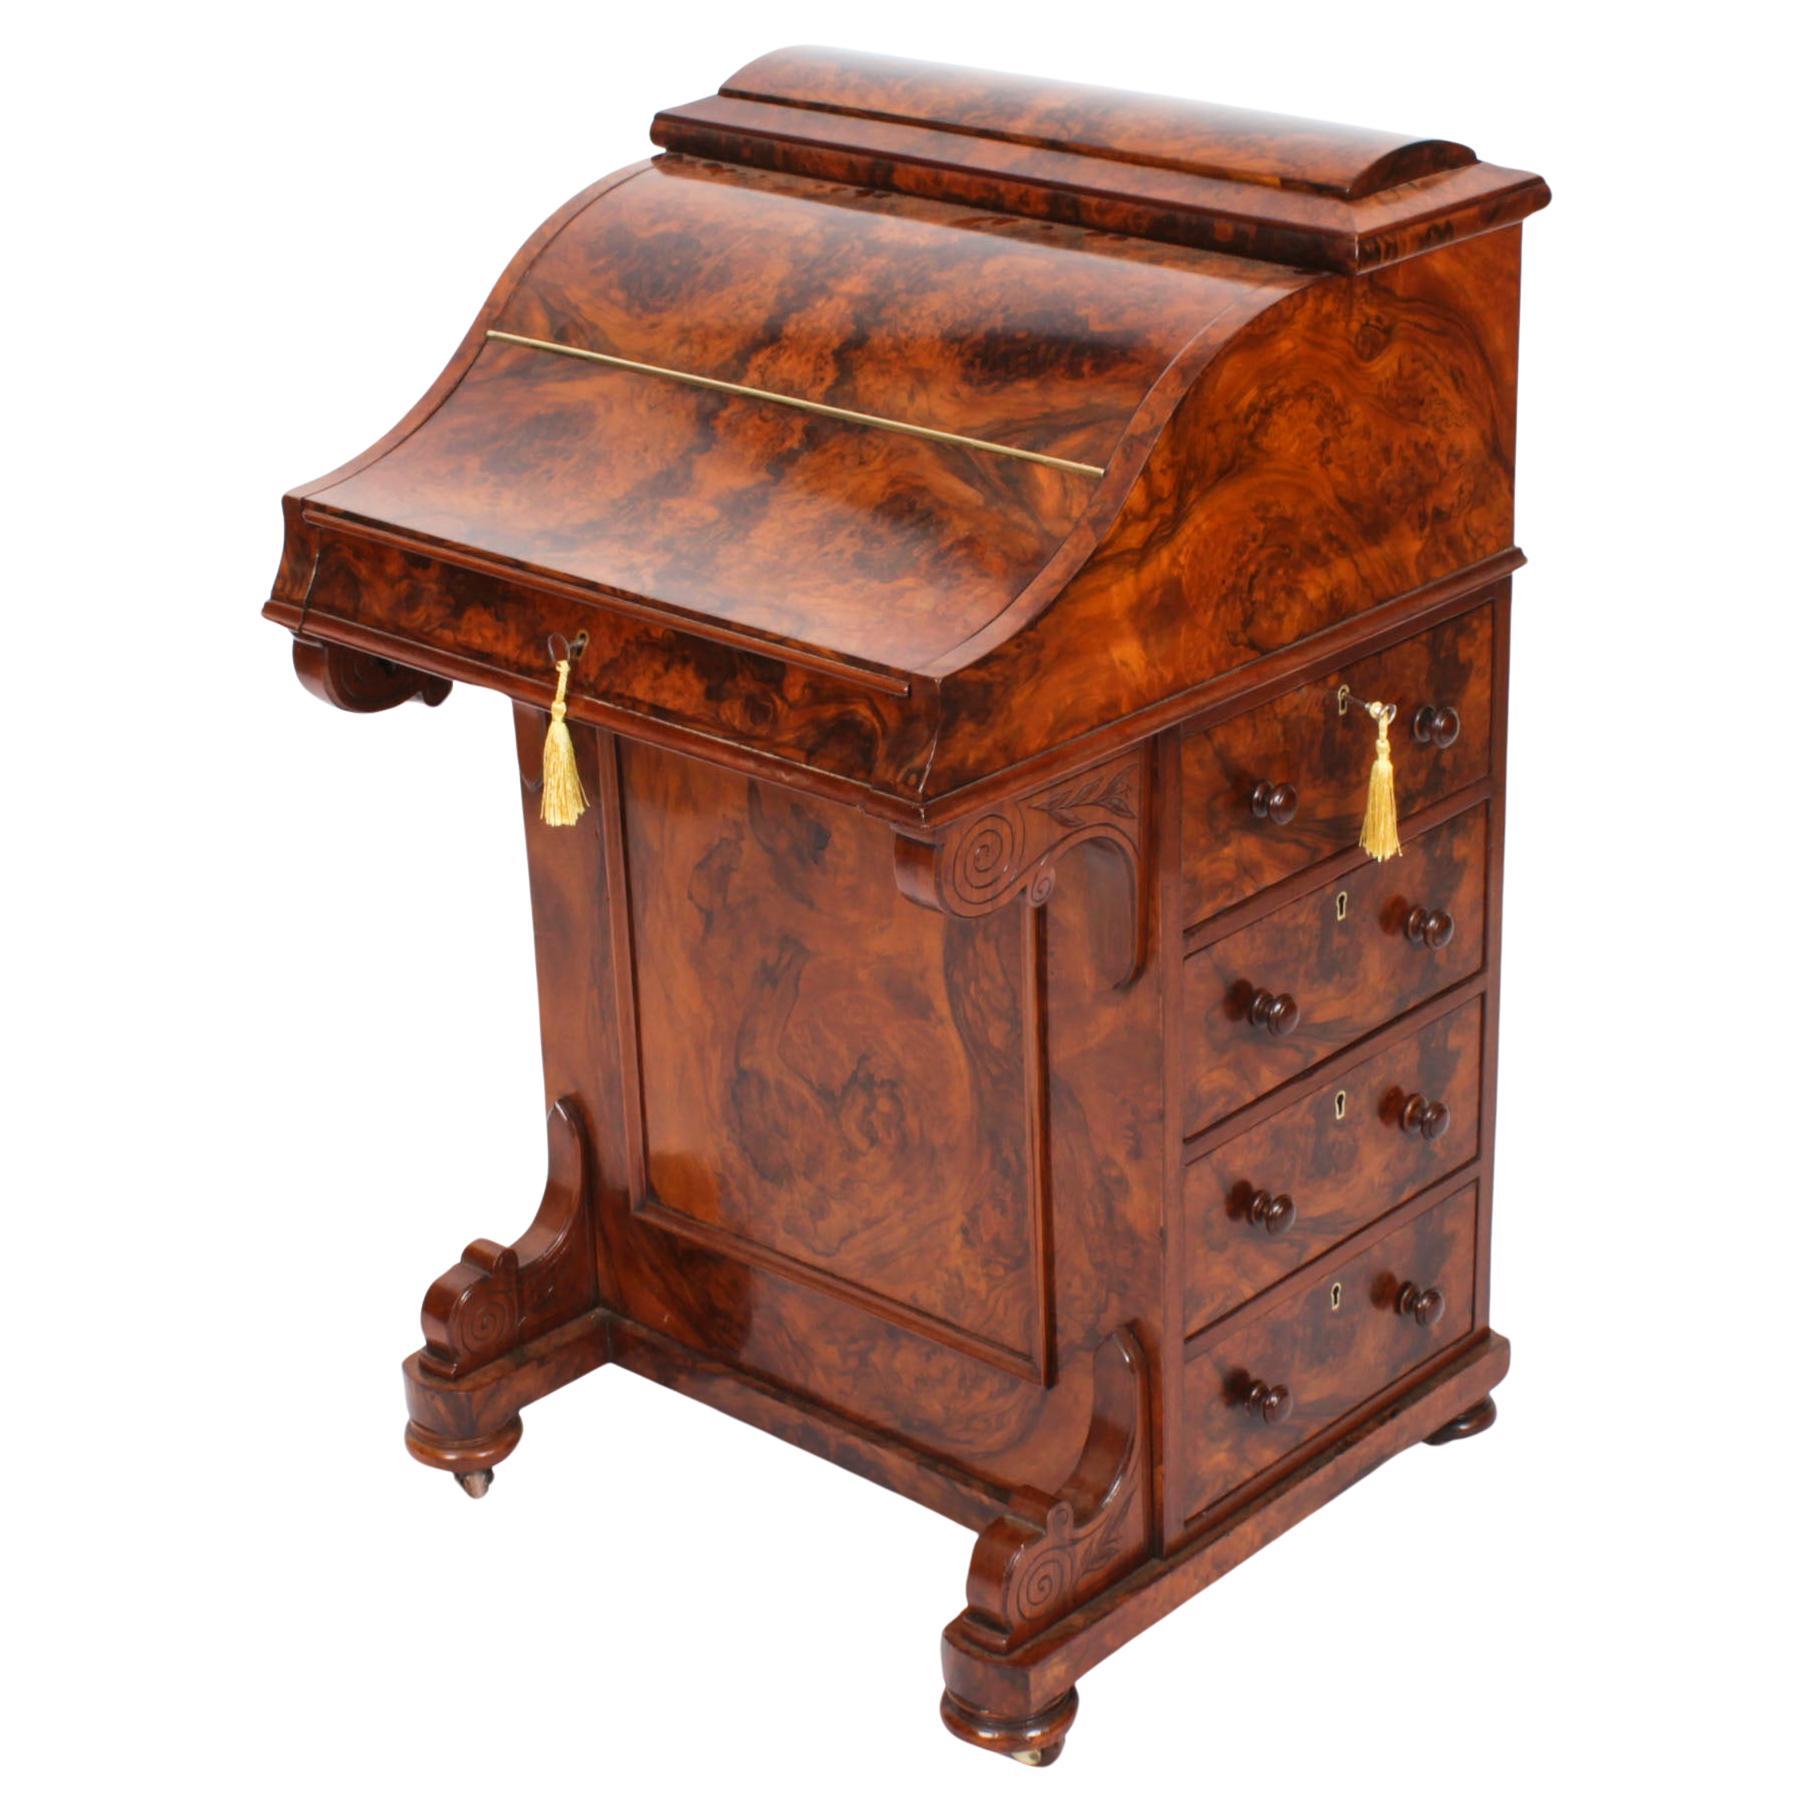 Antique Burr Walnut Pop Up Davenport Desk c.1860 19th Century